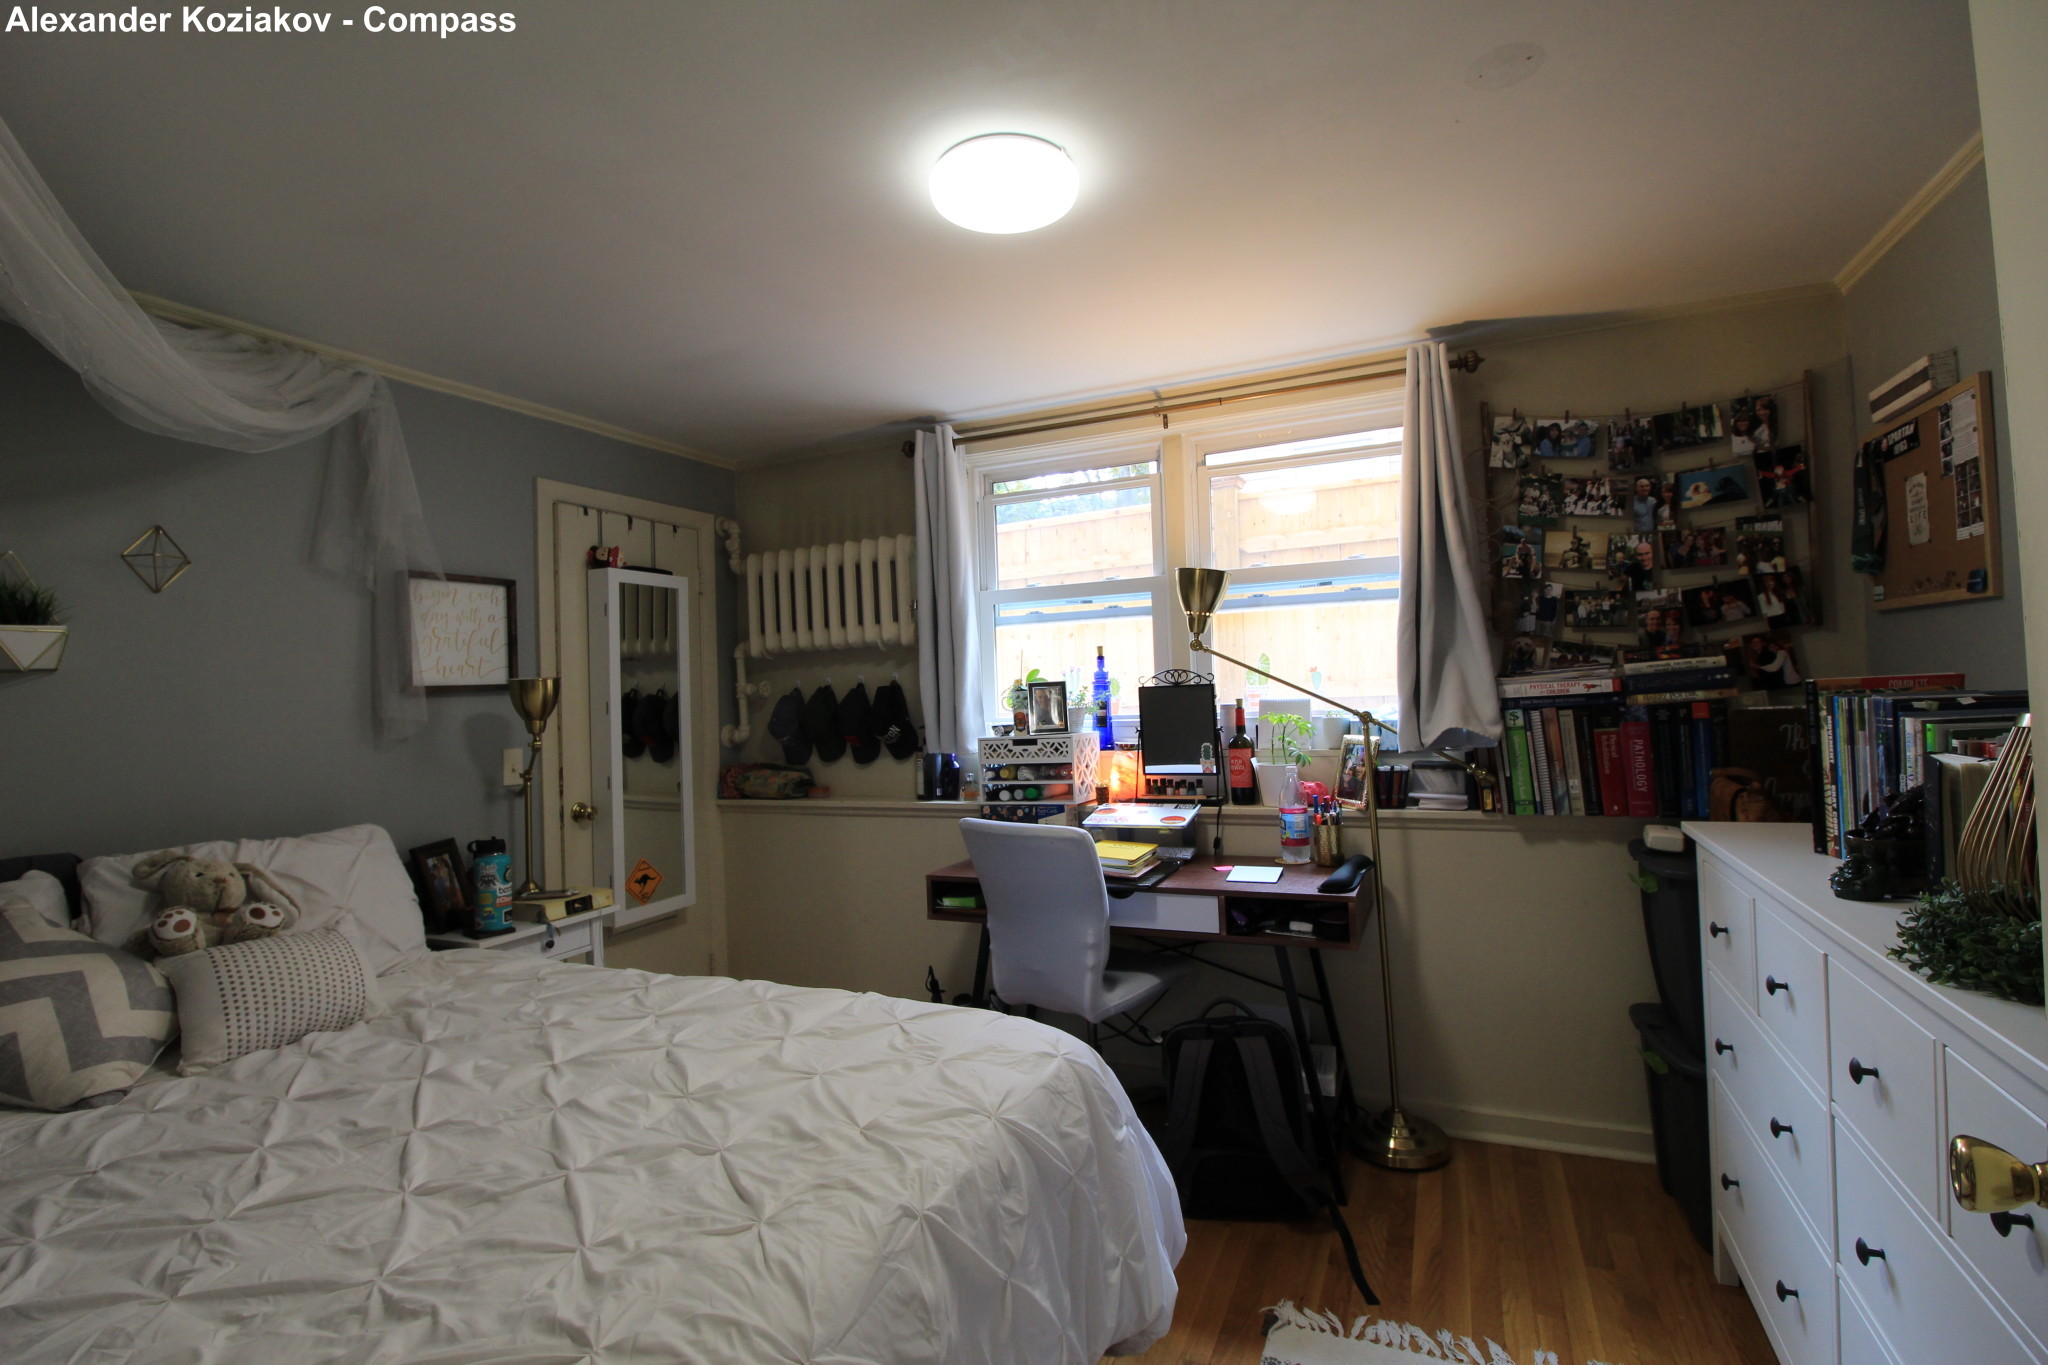 Photos of apartment on Wellman St.,Brookline MA 02446